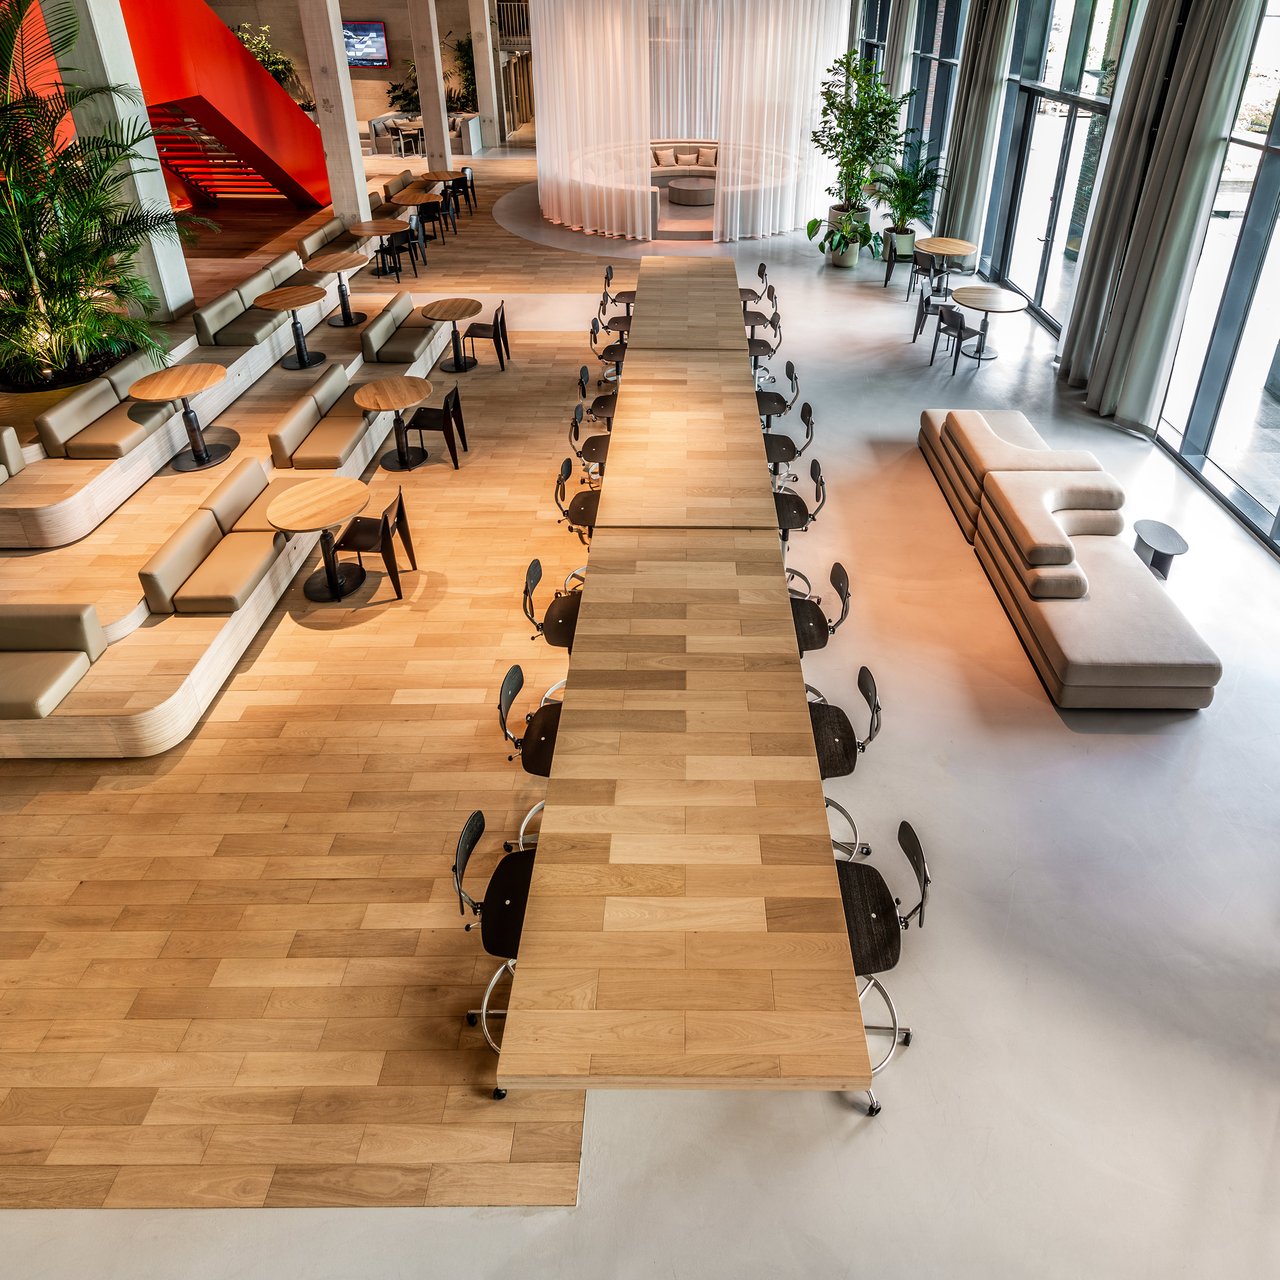 24_ACE_Meetingtable_ConversationPit_Amsterdam_Teo Krijgsman_office interior design_TANK_Tommy Kleerekoper_Sanne Schenk.jpg